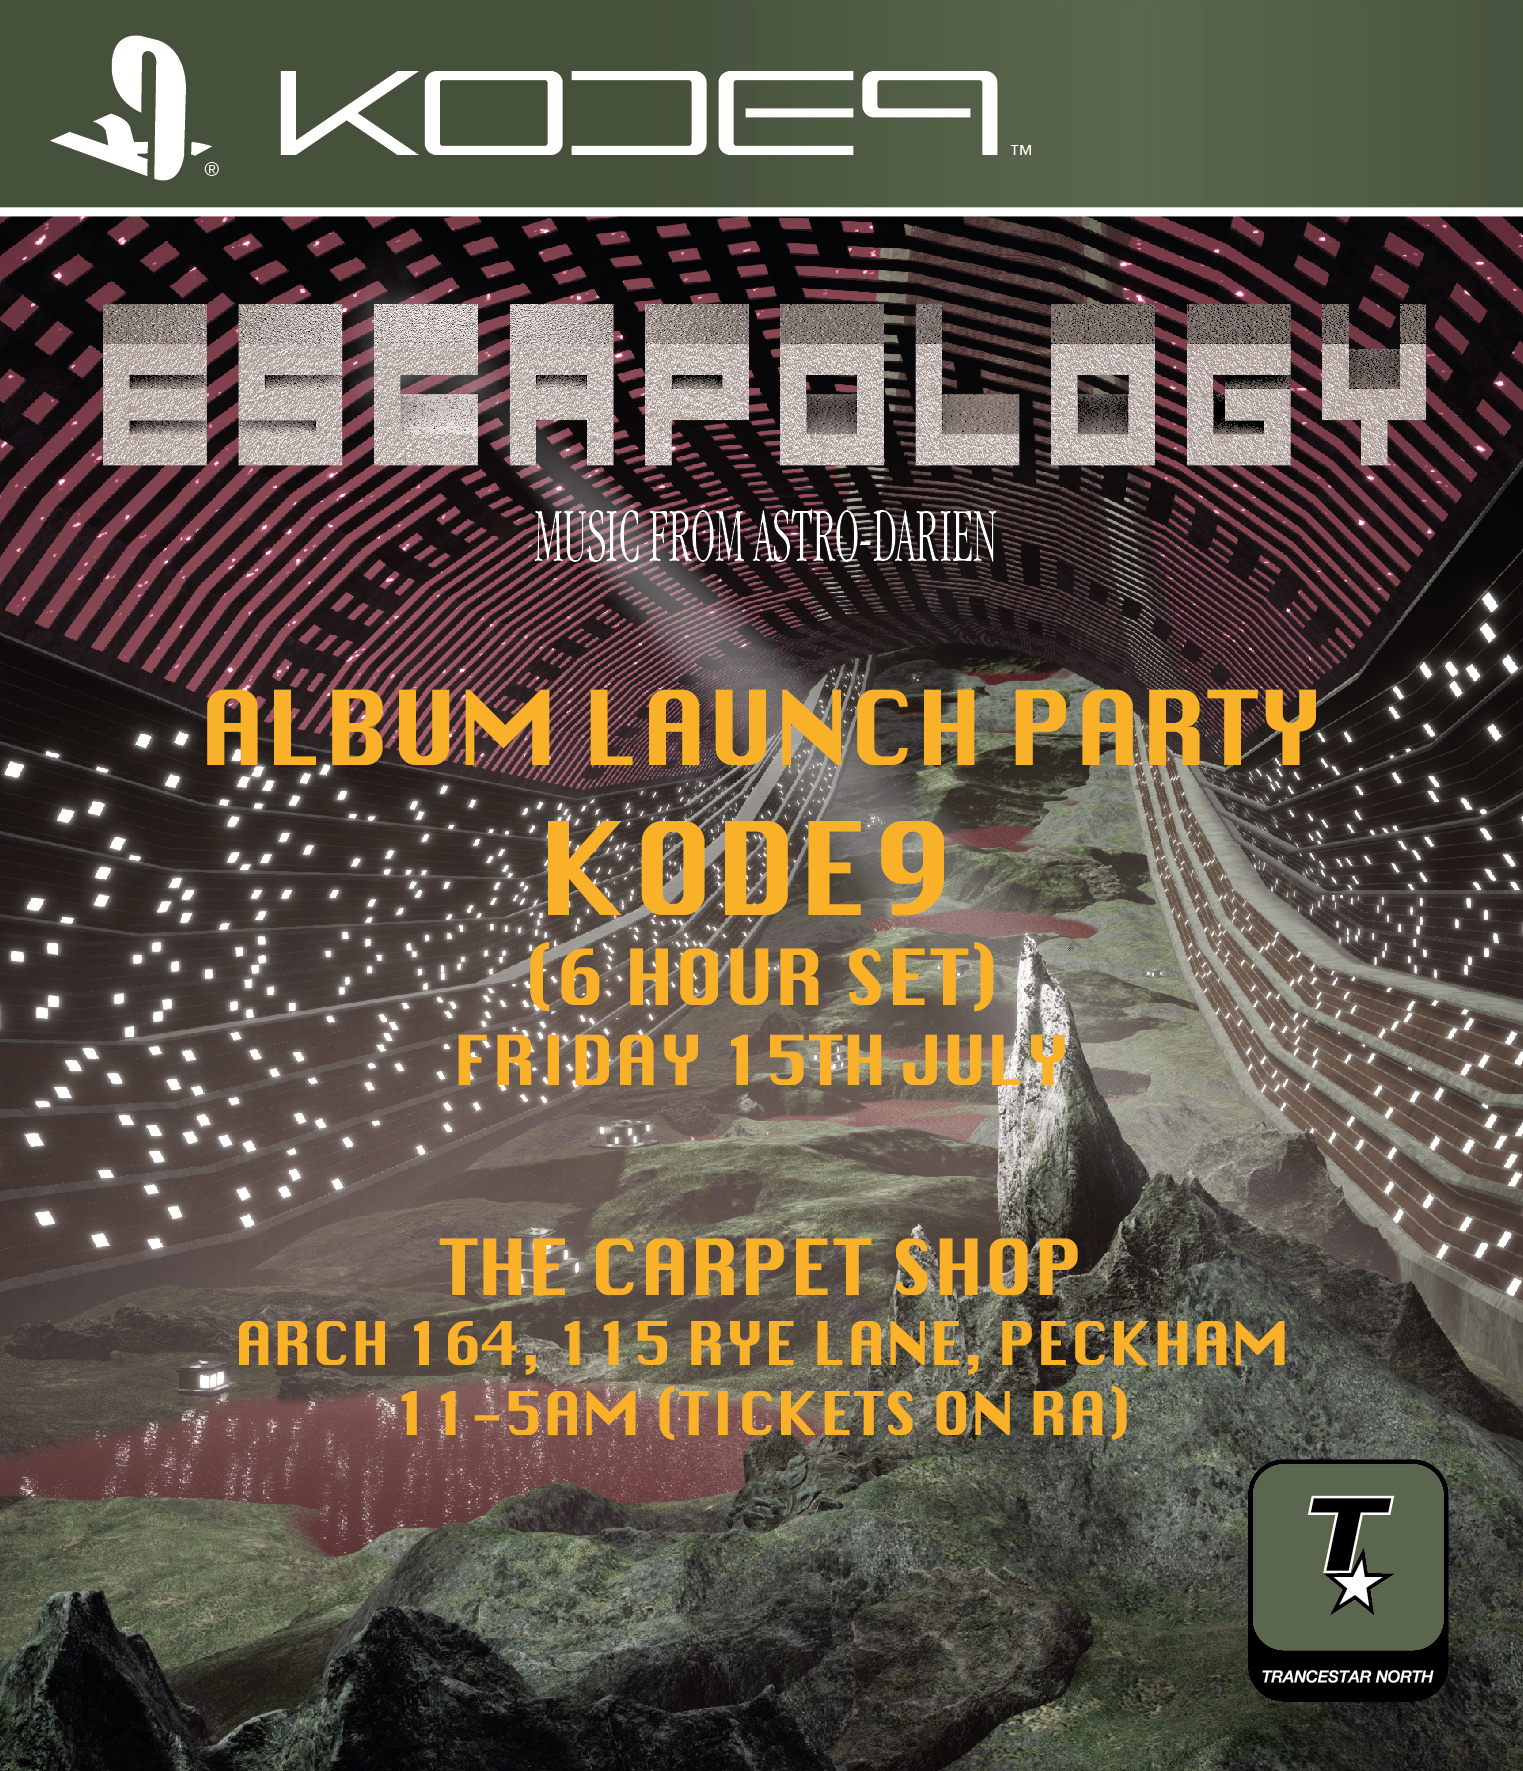 Kode9 - Escapology Album Launch Party - Flyer front